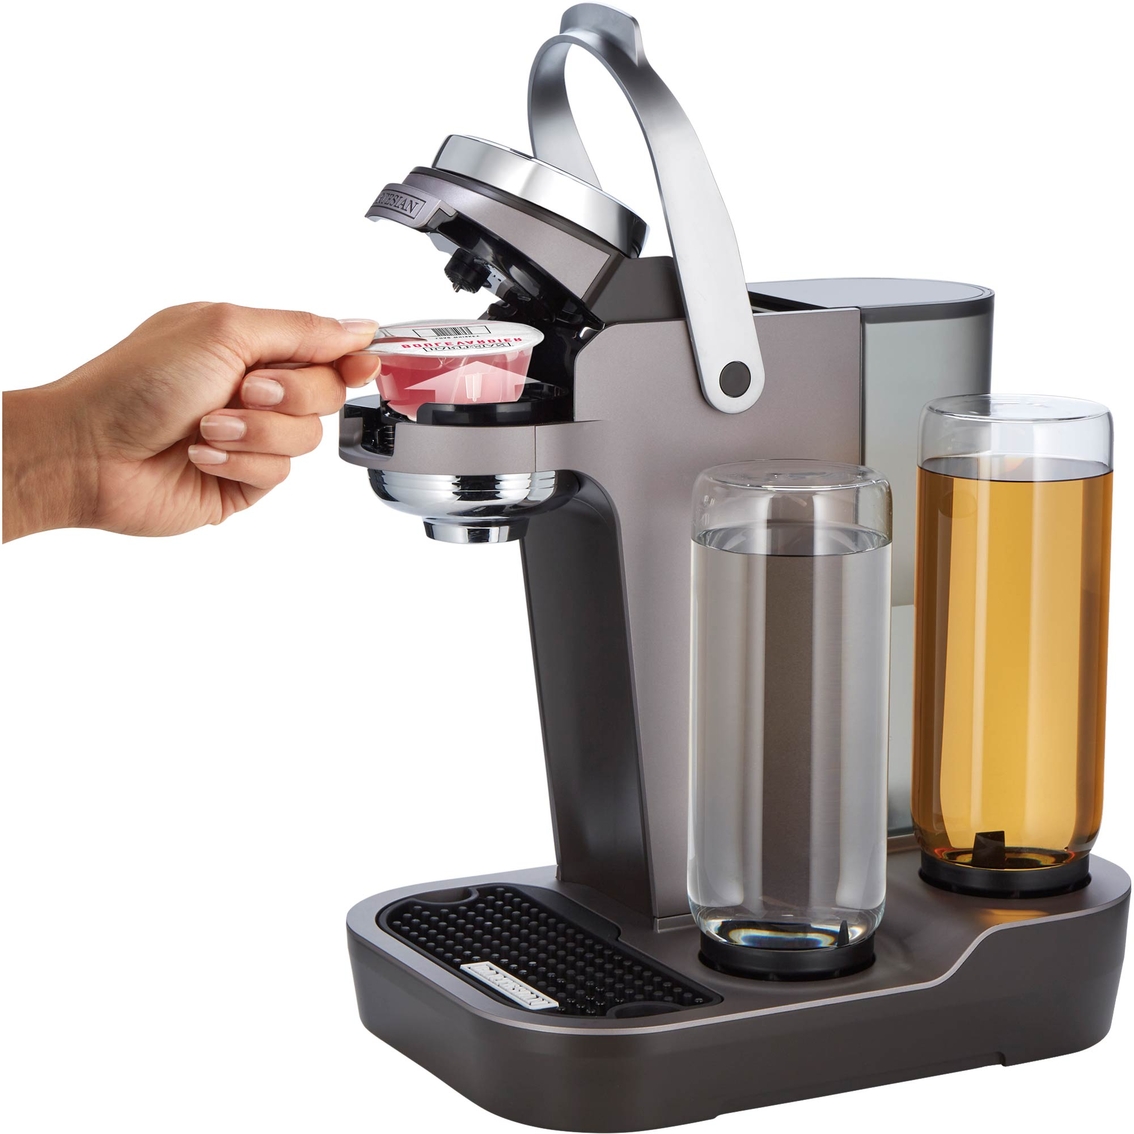 The Bartesian Cocktail Machine Is Like a Nespresso Machine, but